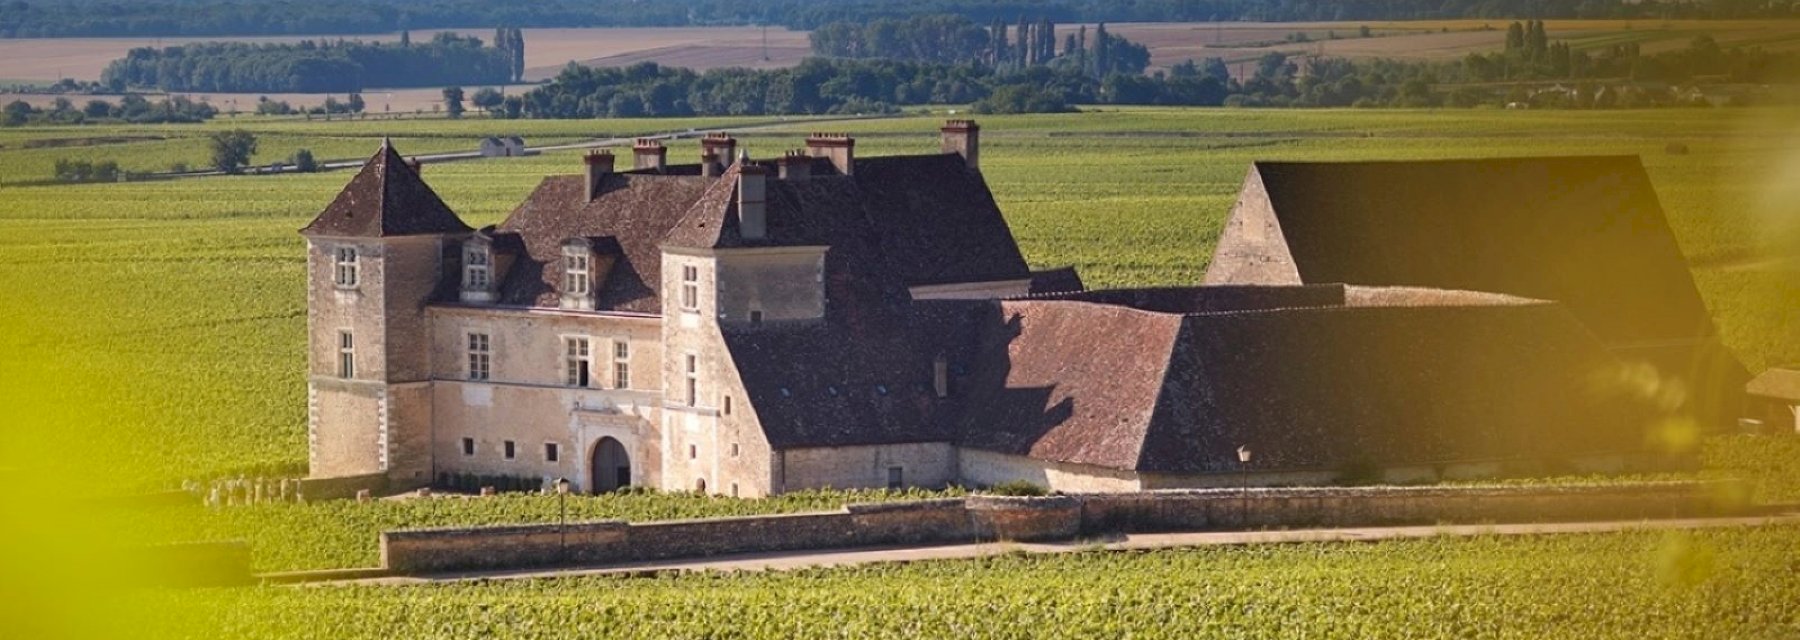 Discover the Clos Vougeot vineyard